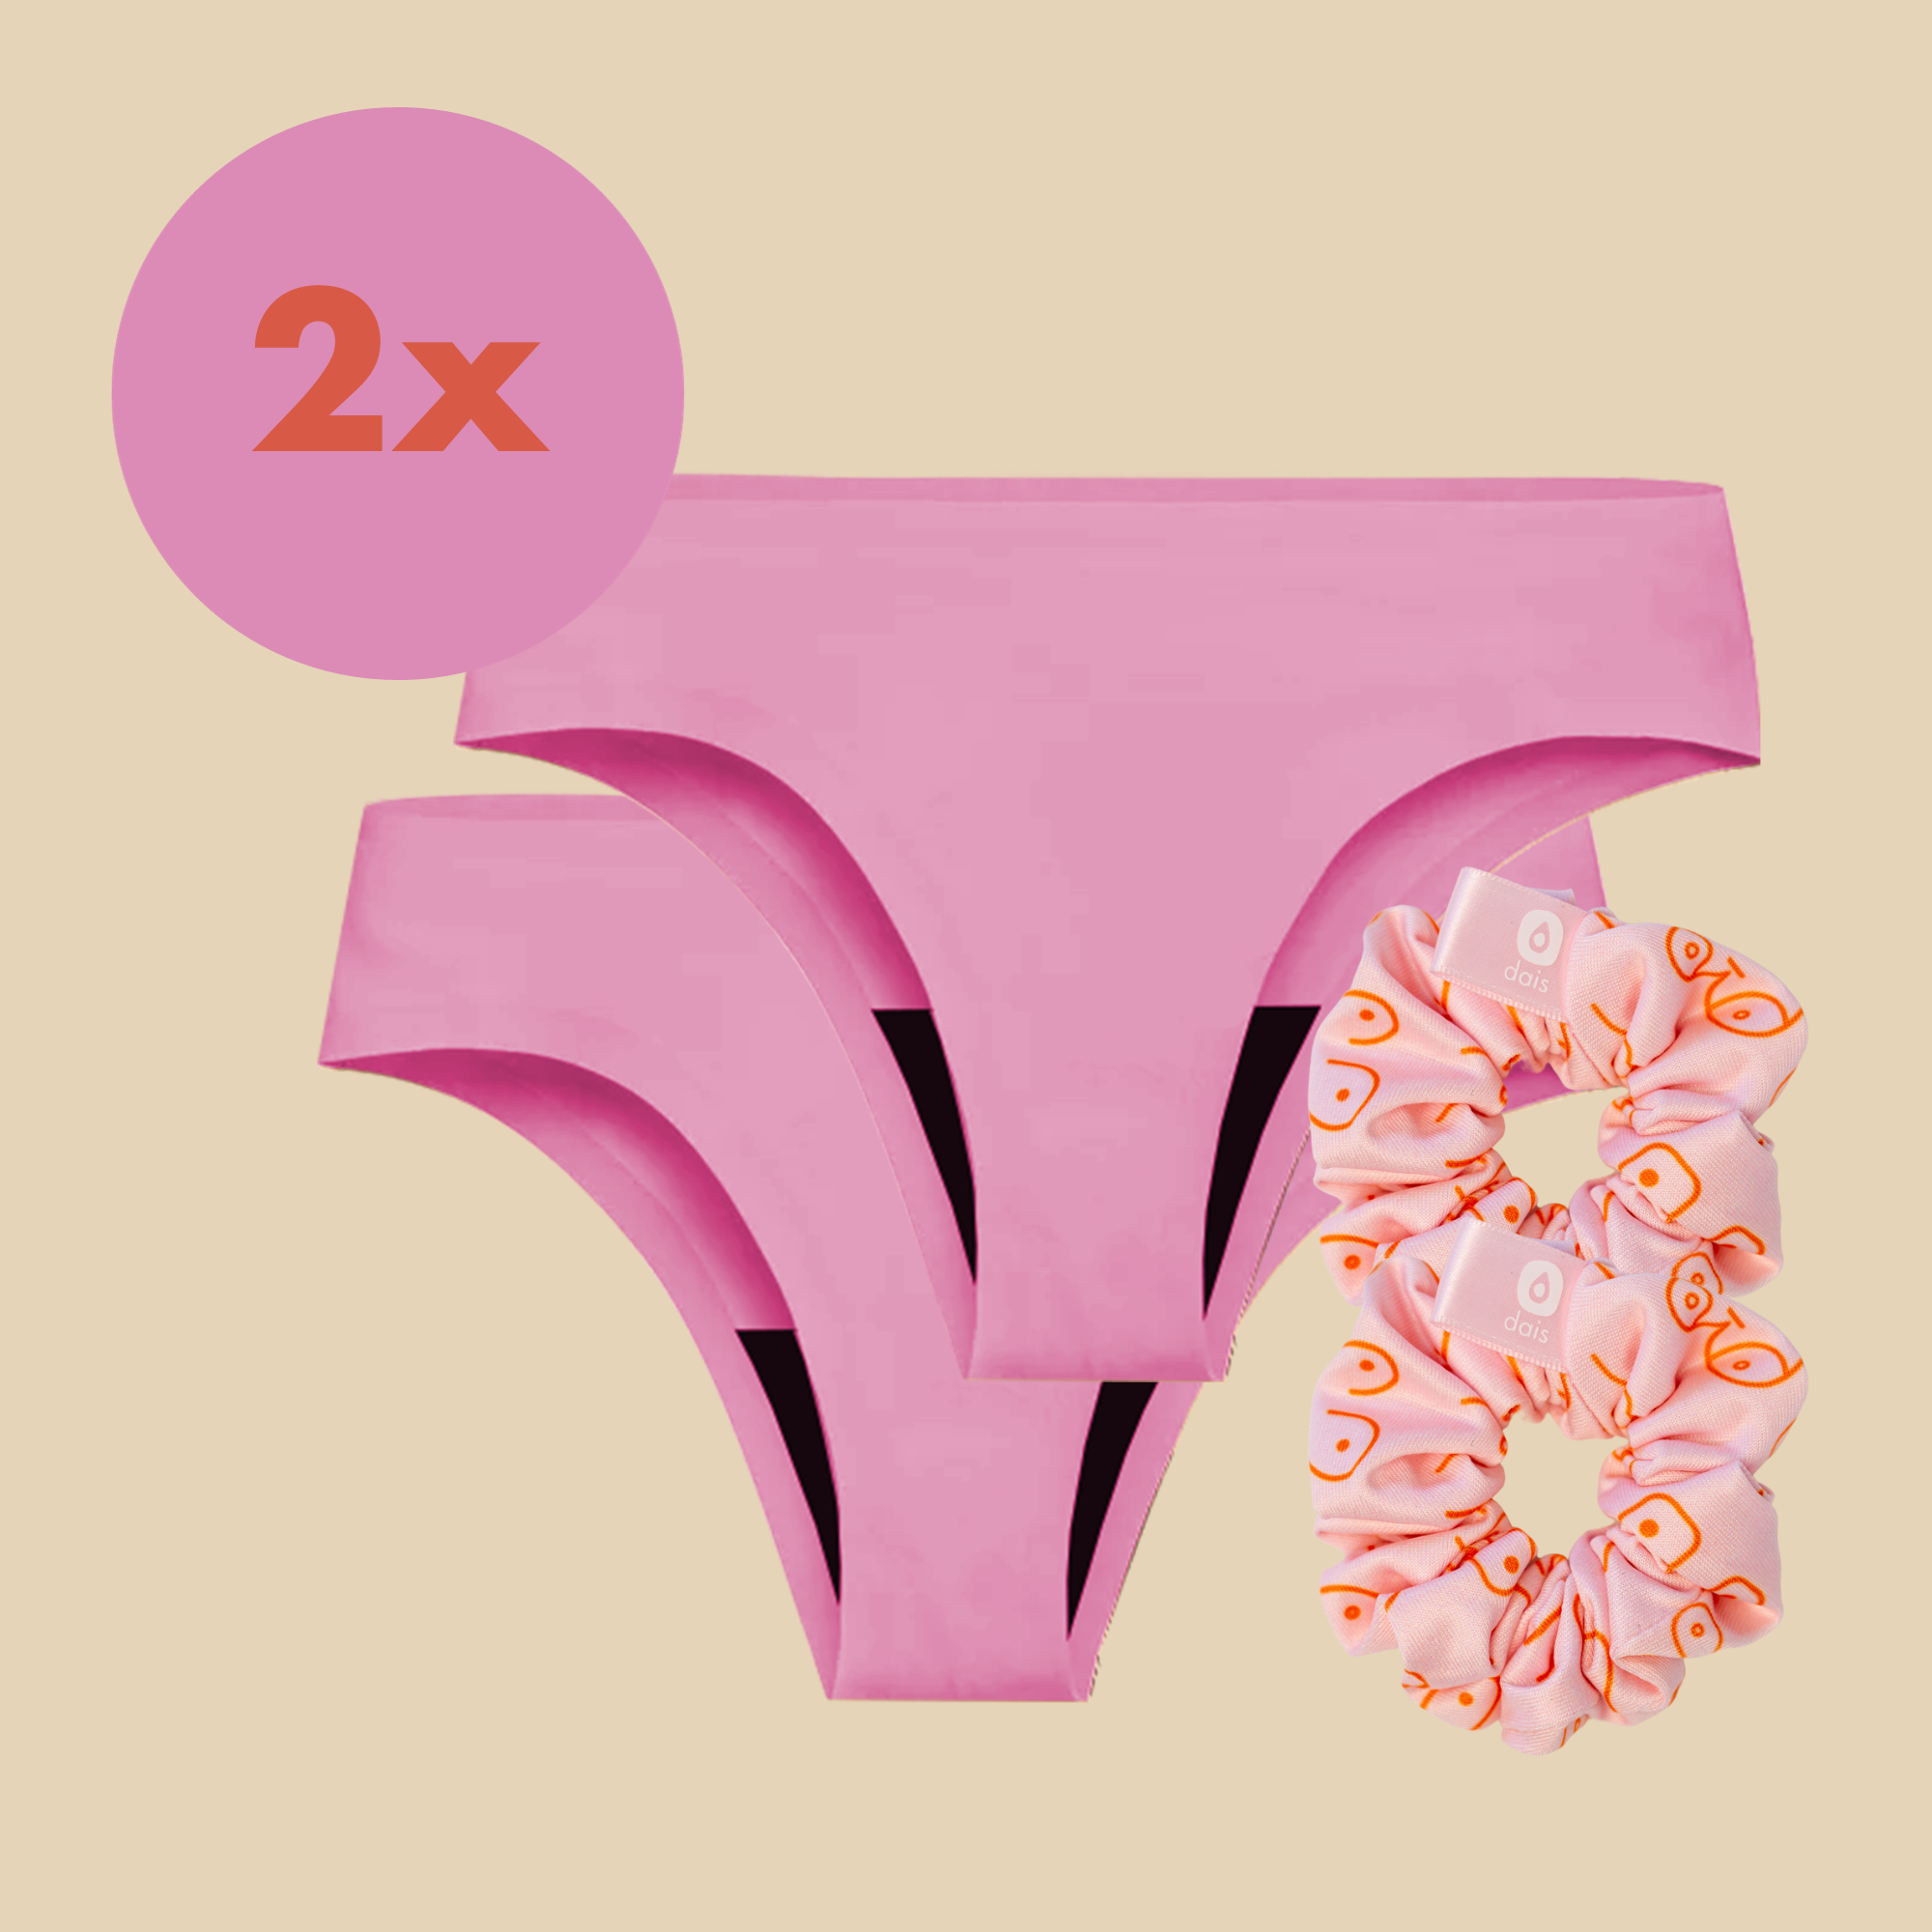 Women's Pink Period Panties